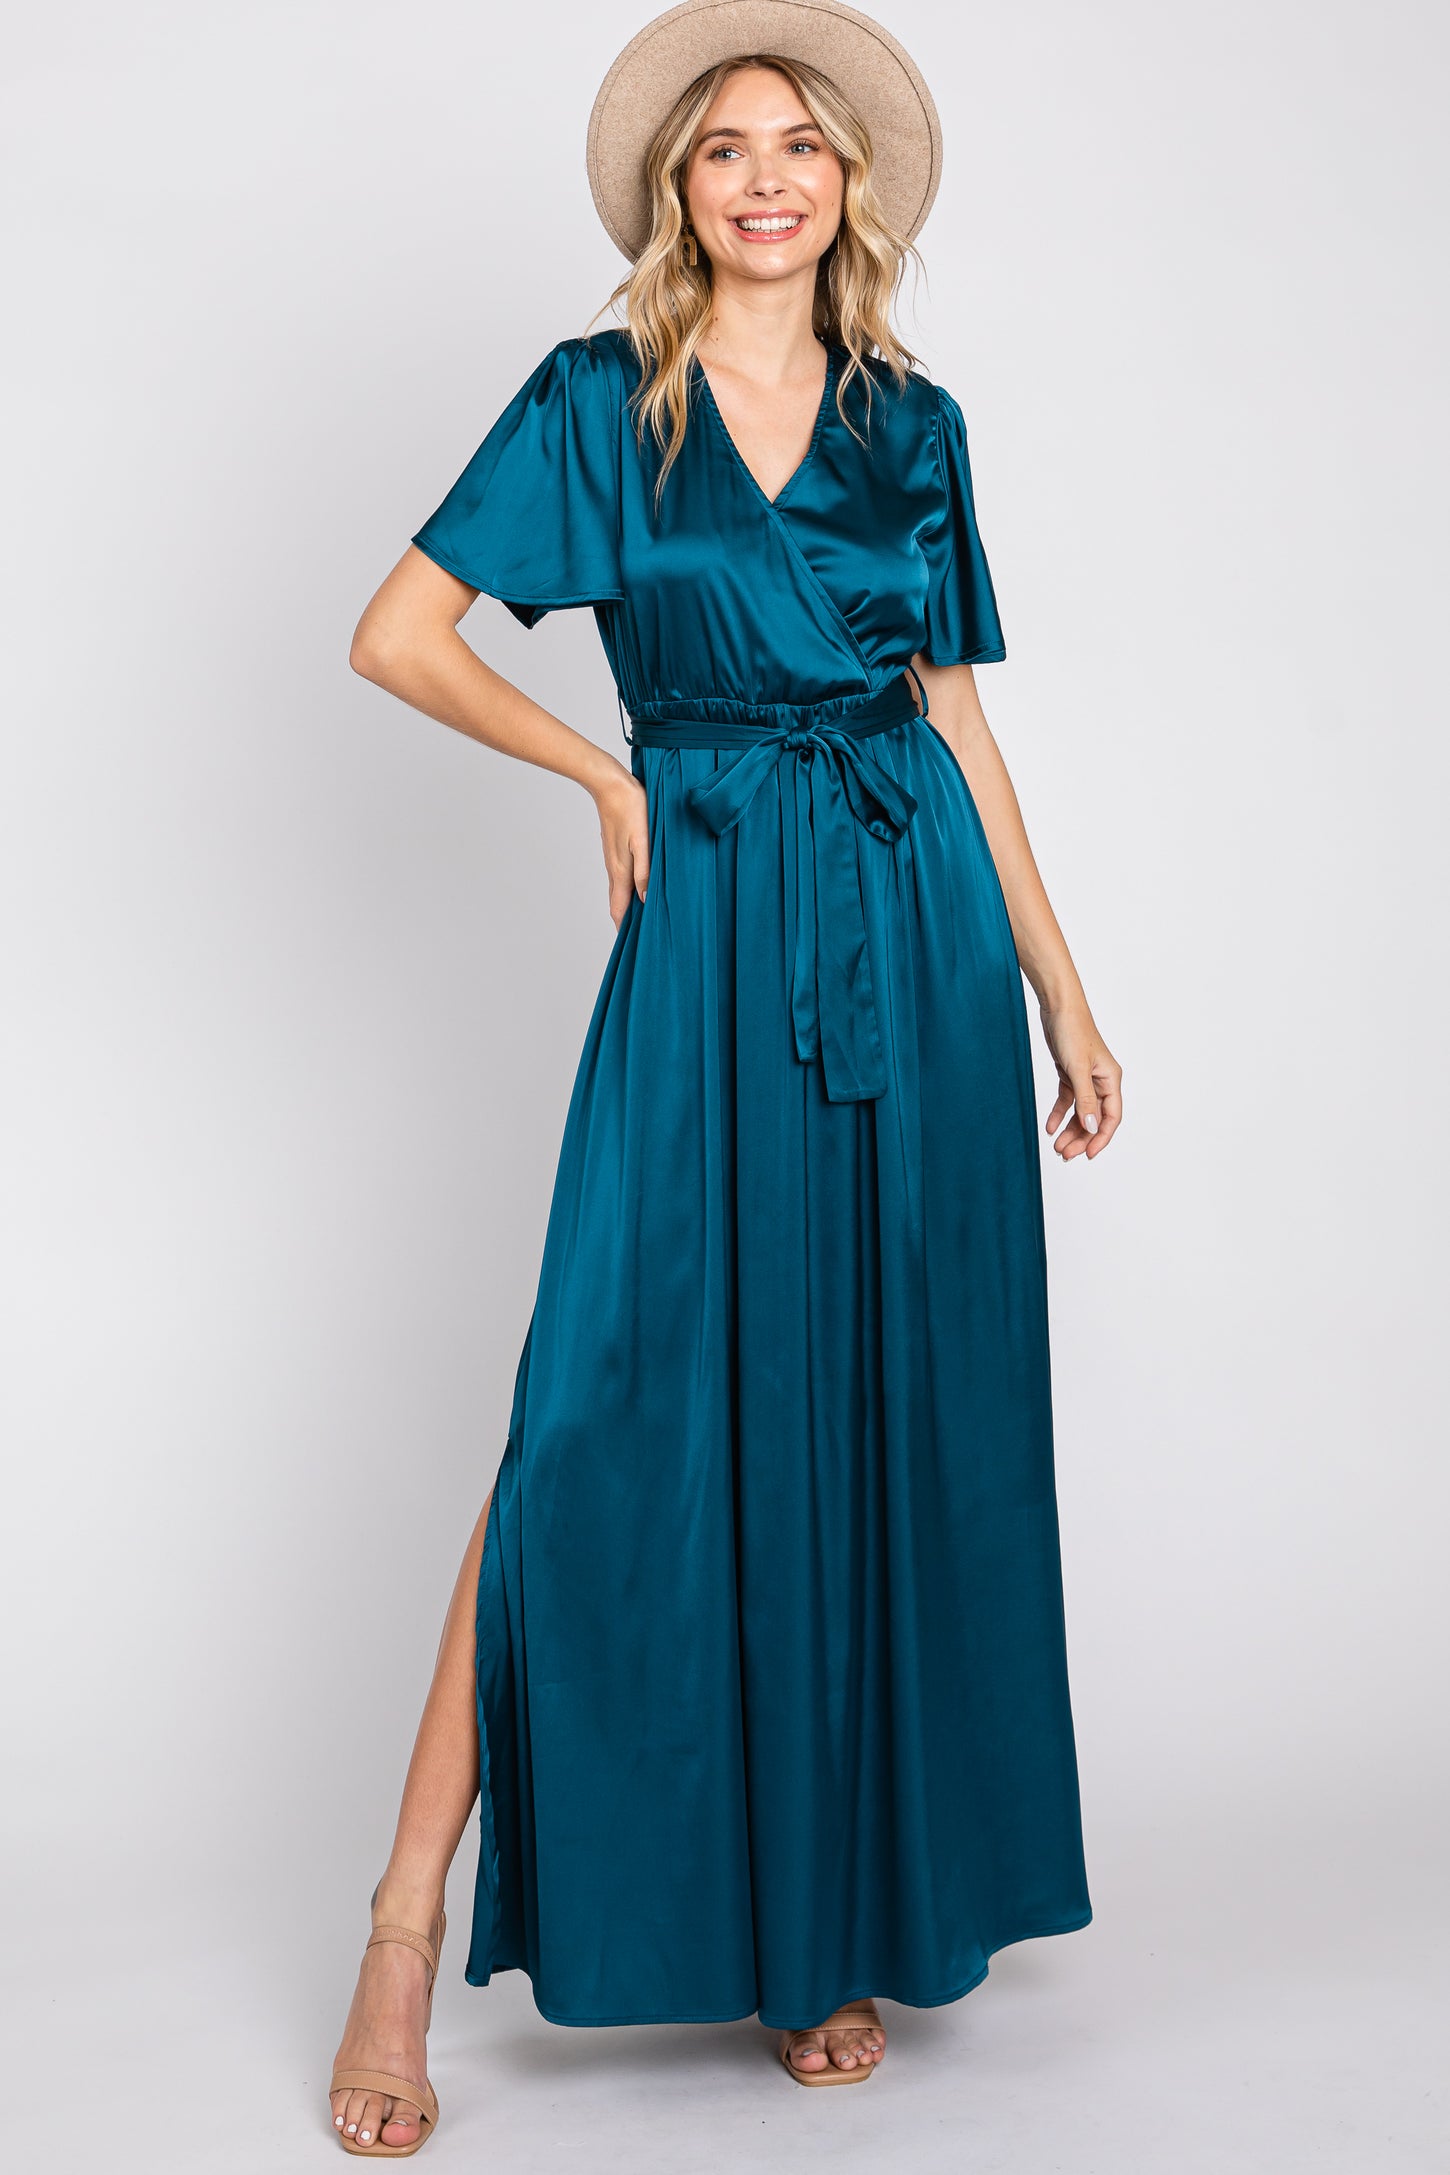 Turquoise Blue Drawstring Maternity to Nursing Dress